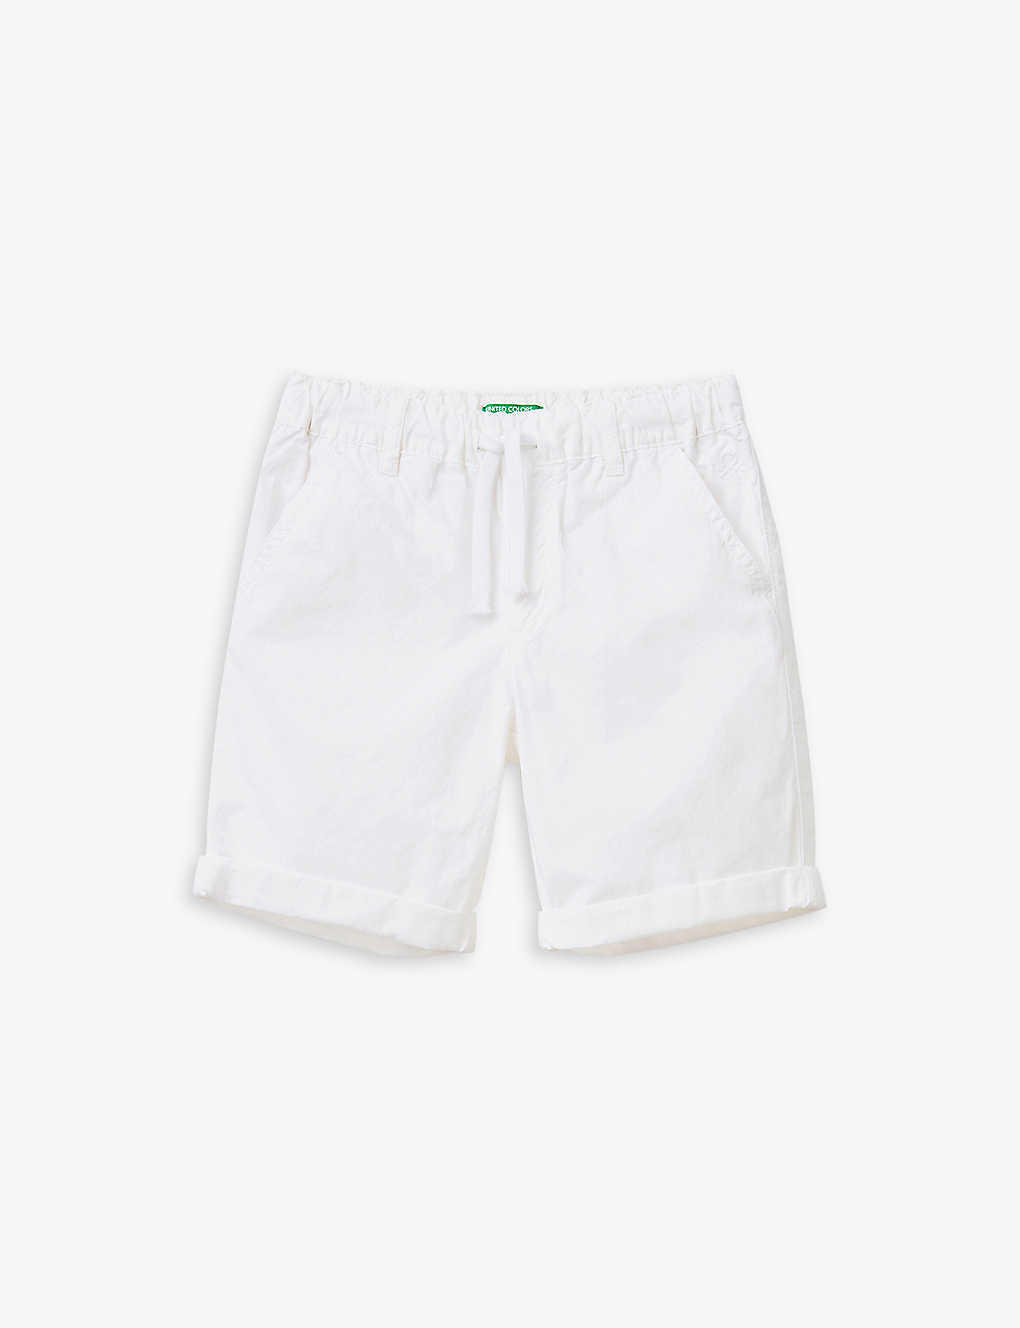 Benetton Boys White Kids Drawstring Cotton Shorts 1-6 Years